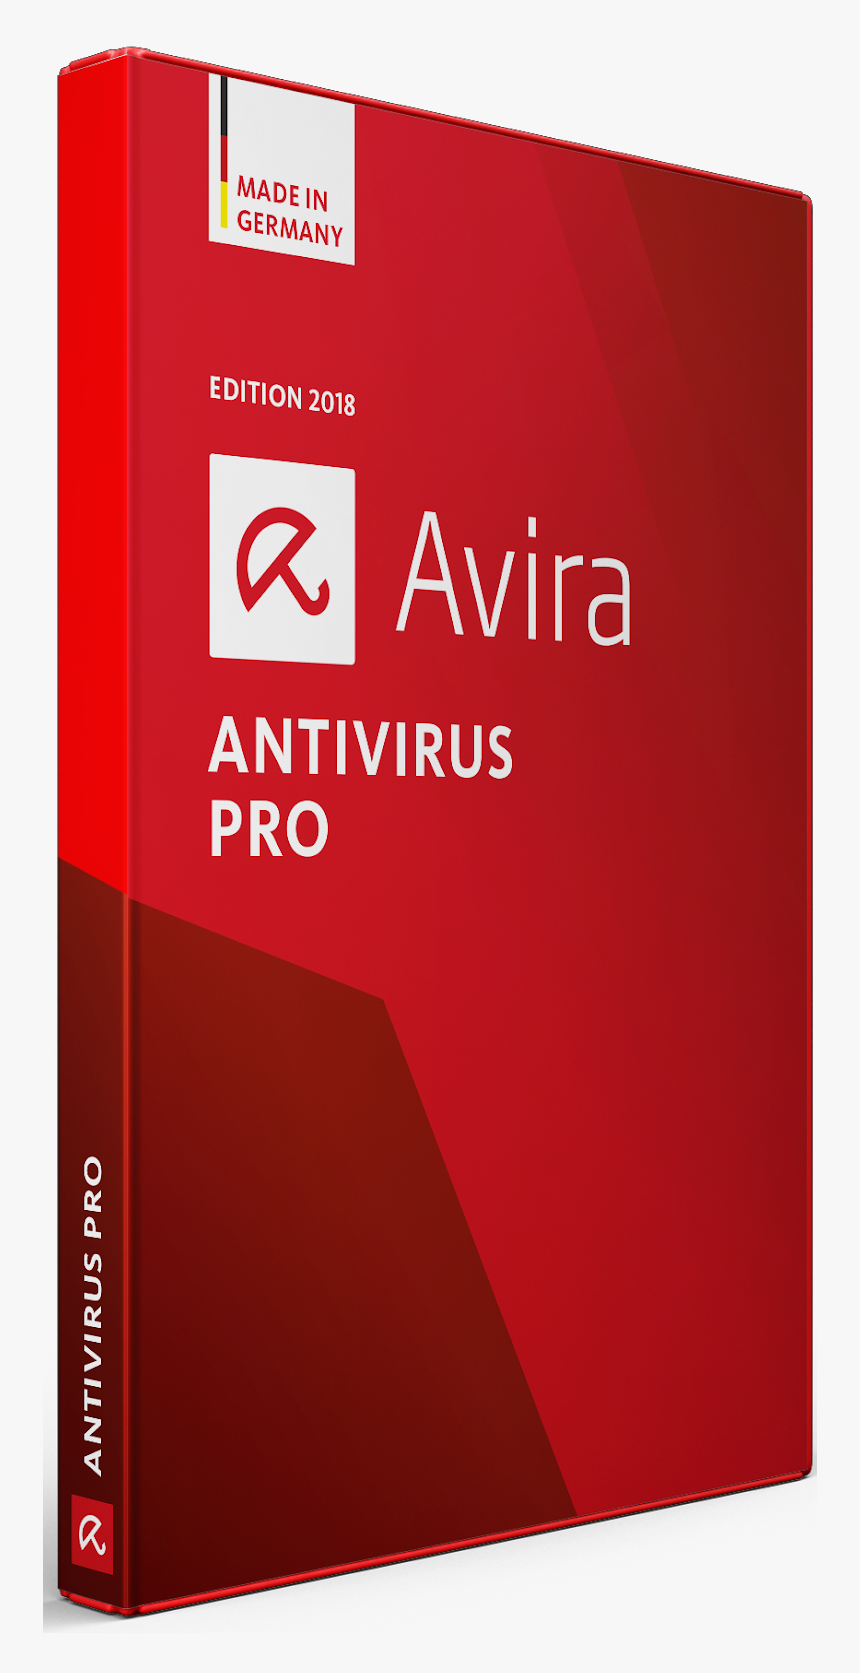 Avira Antivirus Is One Of The Most Popular Antivirus - Antivirus Software, HD Png Download, Free Download